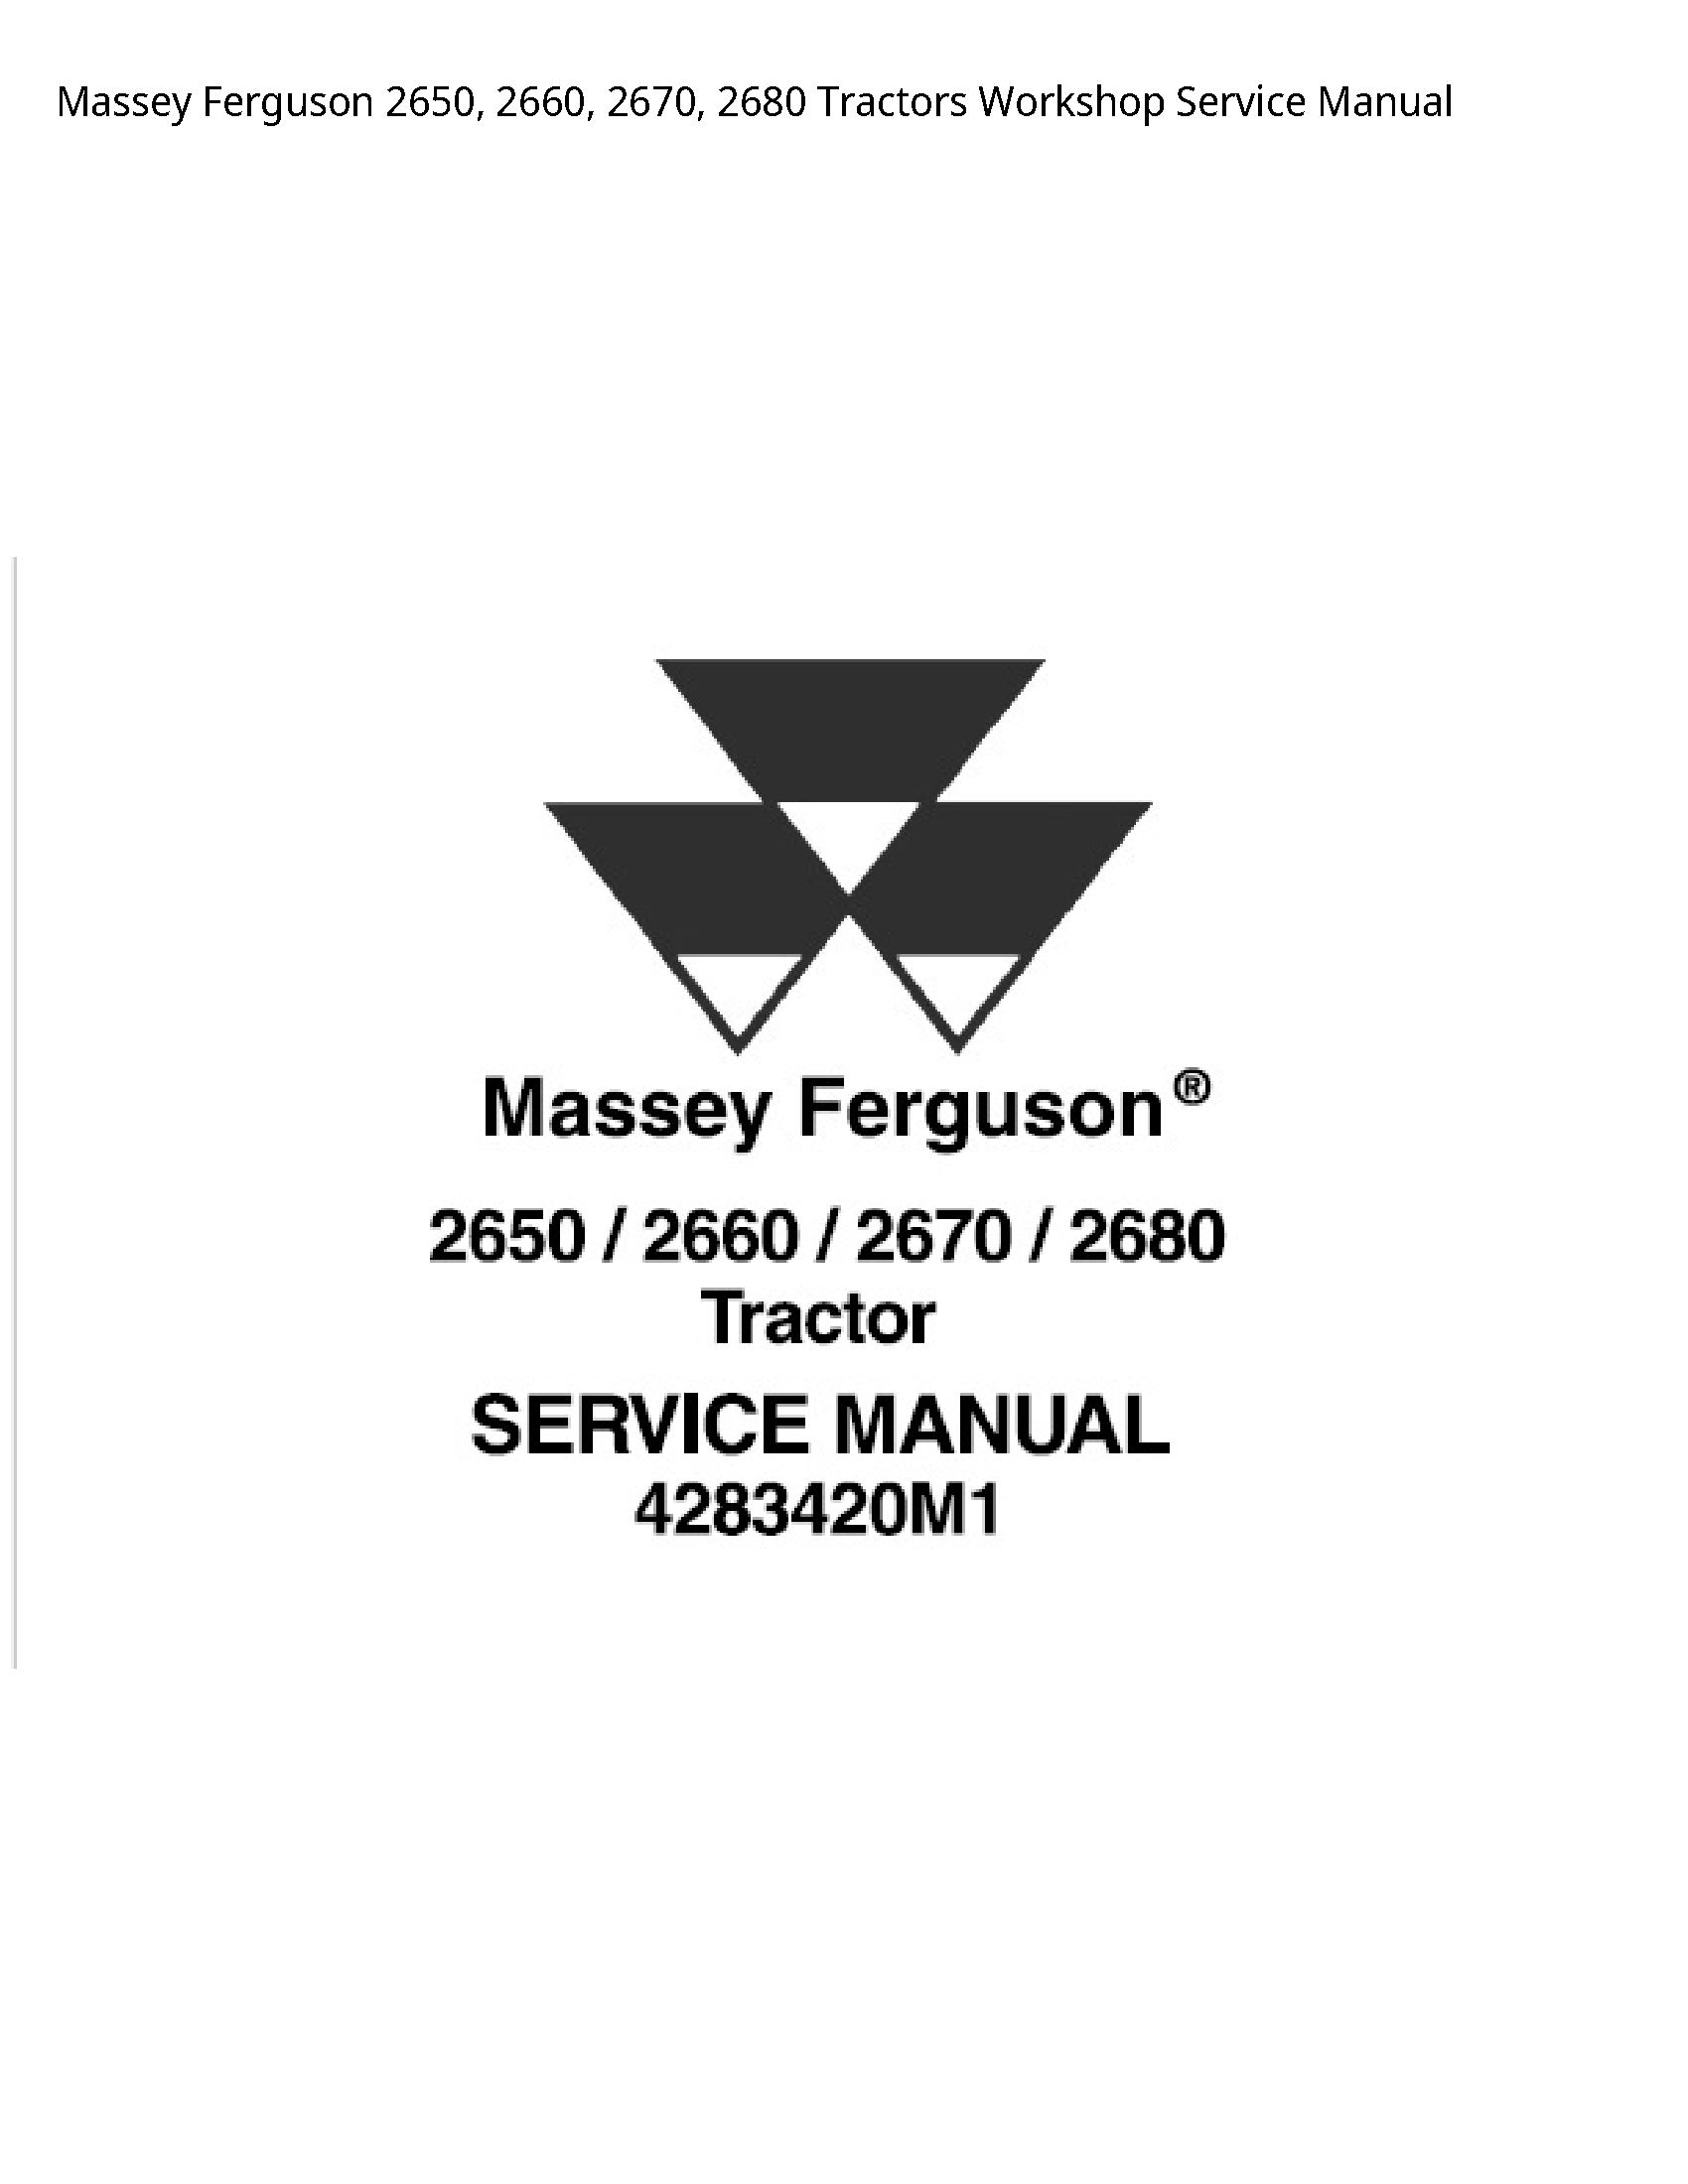 Massey Ferguson 2650 Tractors Service manual